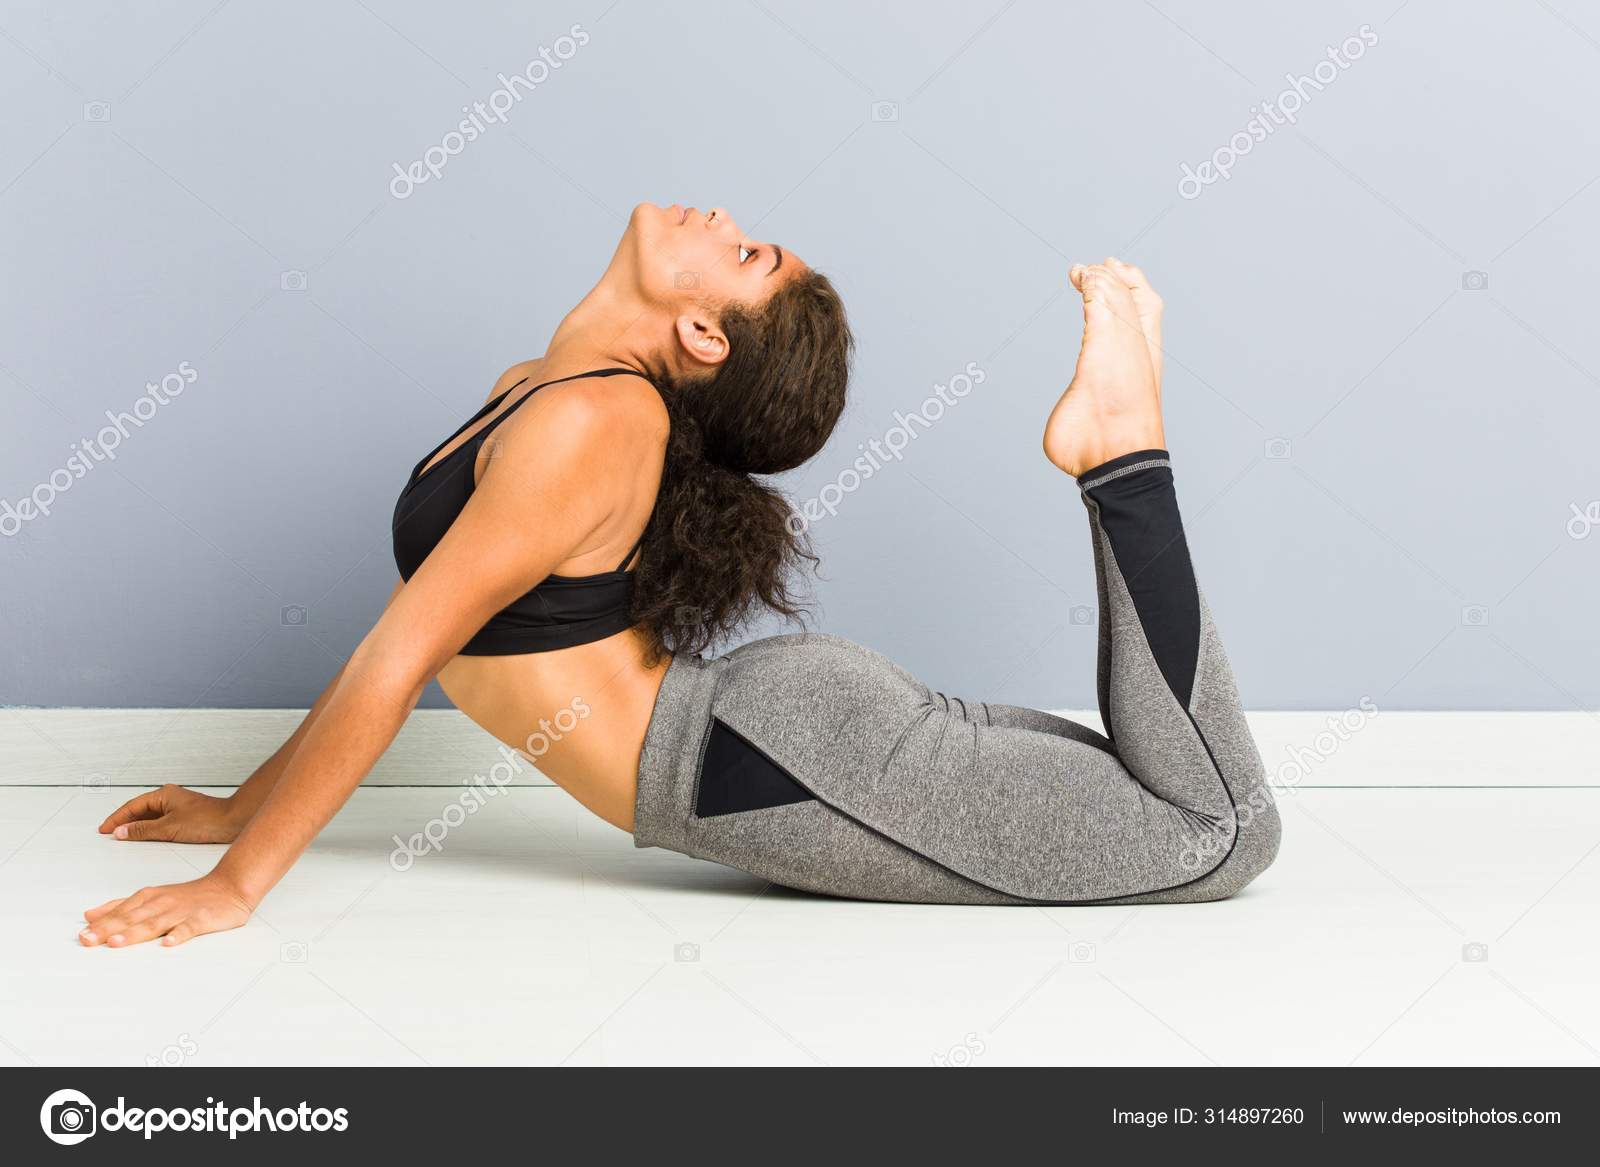 Rhythmic Yoga Academy, USA - 5 Best Yoga Poses to Complement Your  Bodybuilding Routine: 1. Plank Pose 2. Opposite Arm and Leg Extension 3.  Standing Forward Bend (Uttanasana) 4. Cobra Pose (Bhujangasana)